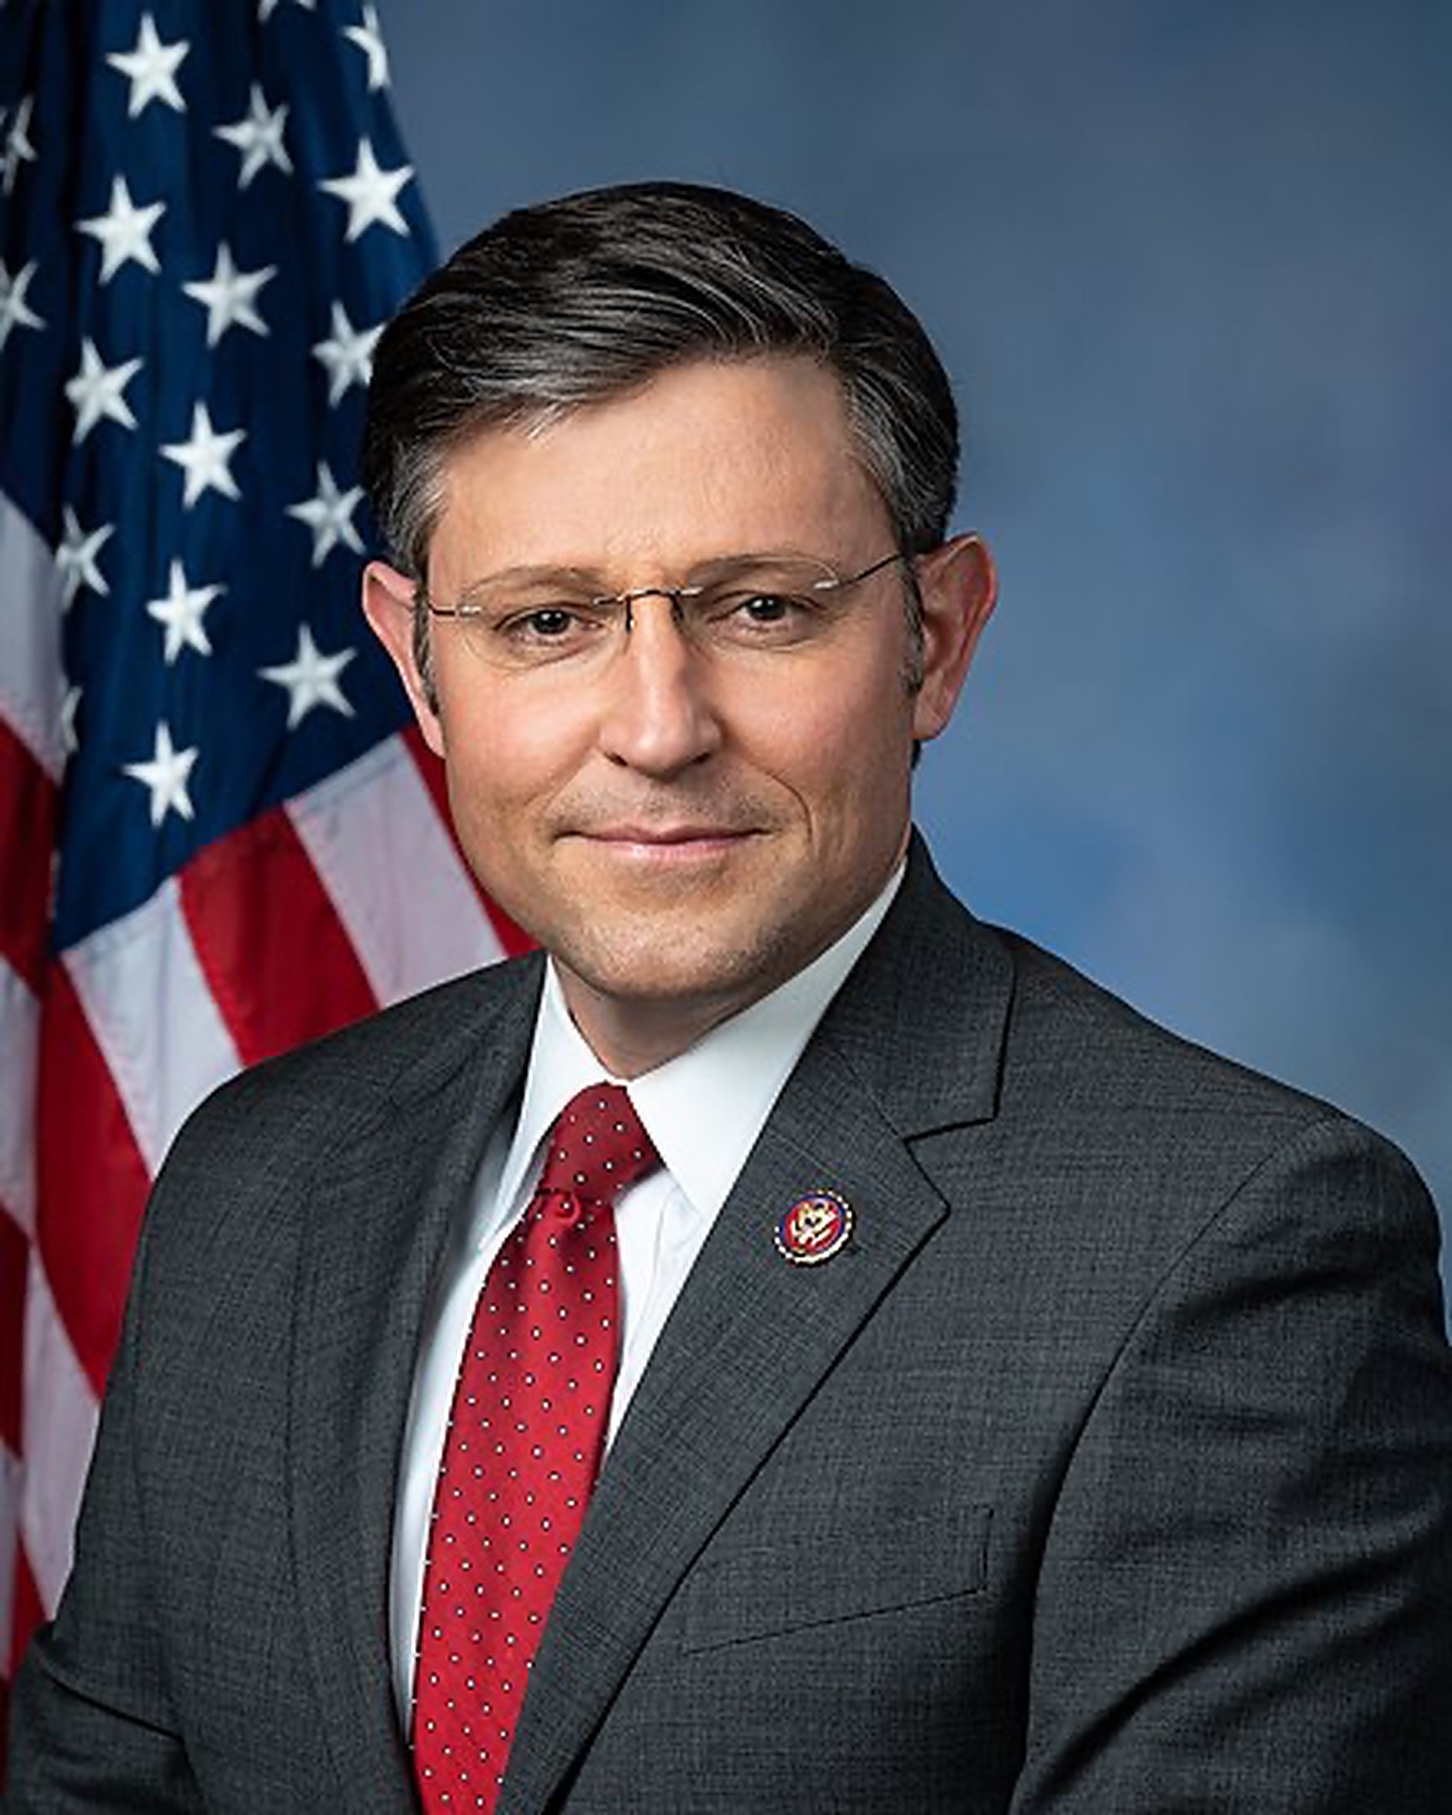 Mike Johnson, președinte, Camera Reprezentanților,SUA, Congres